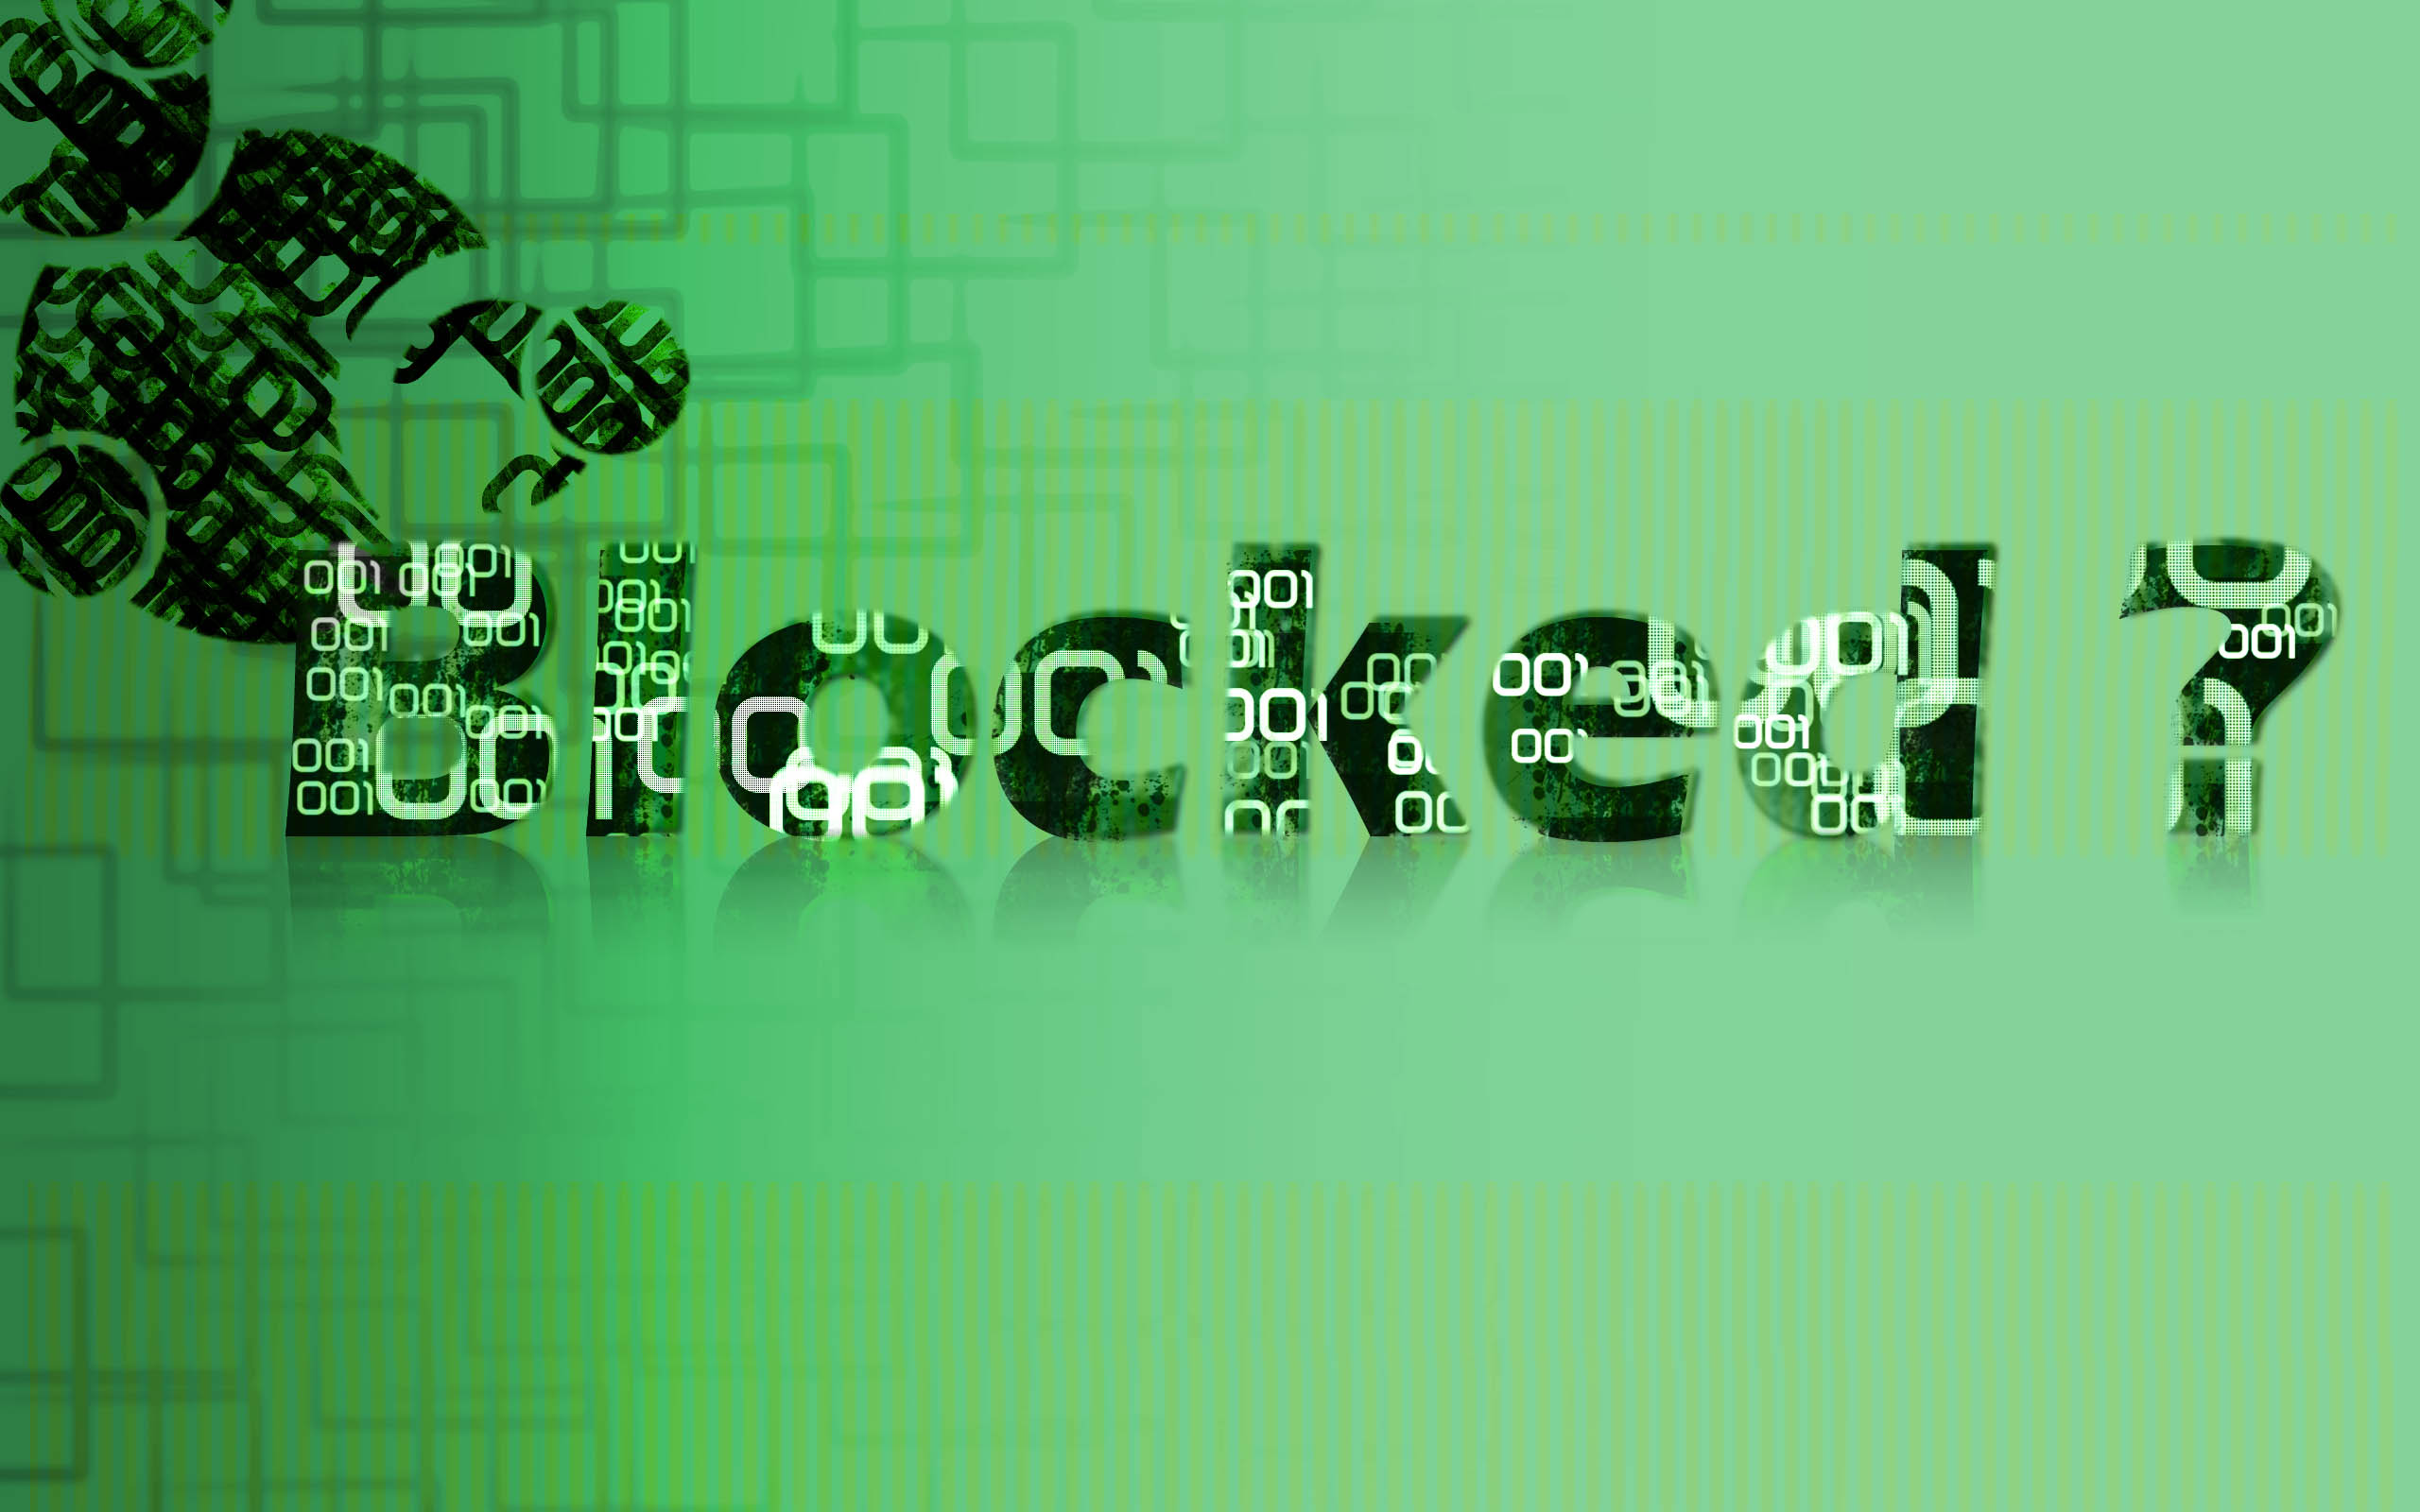 binary, computer, technology, ball, blocked, green